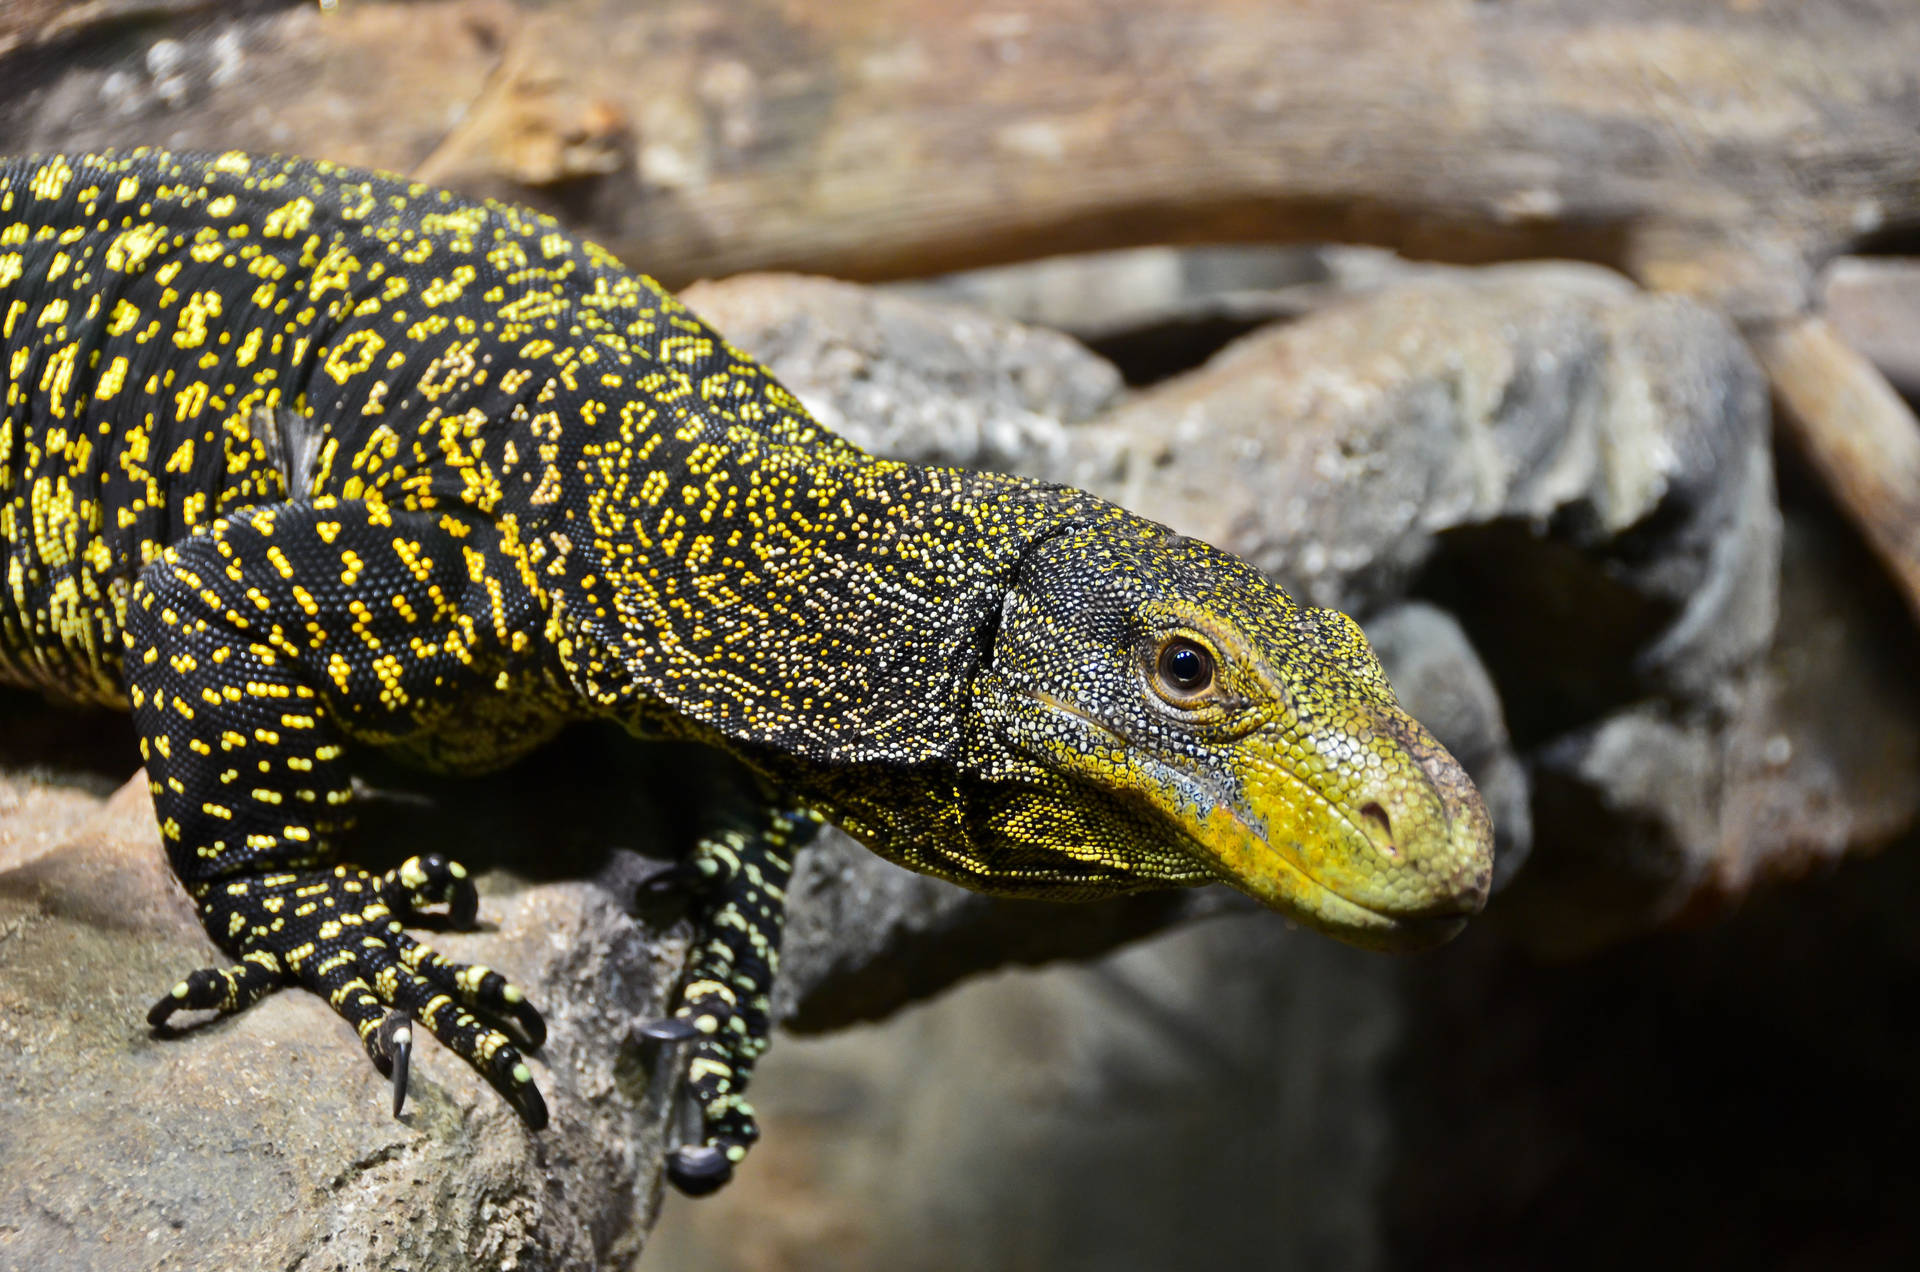 Caption: Majestic Yellow-Toned Monitor Lizard in Natural Habitat Wallpaper